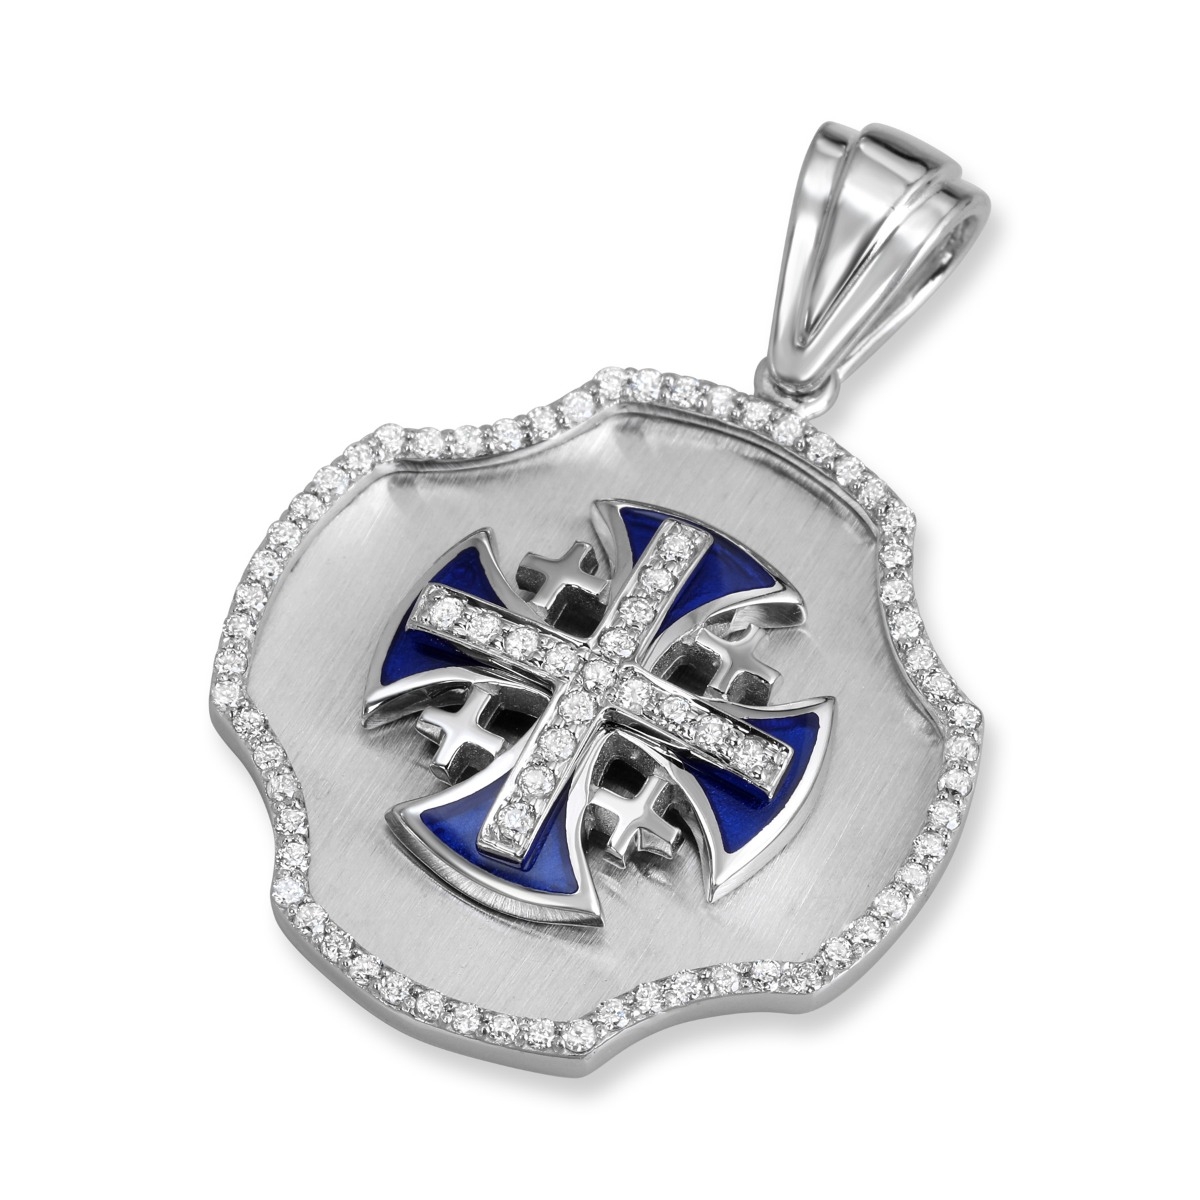 Anbinder Jewelry 14K White Gold, Blue Enamel, and Diamond Splayed Jerusalem Cross Shield Pendant with 77 Diamonds - 1